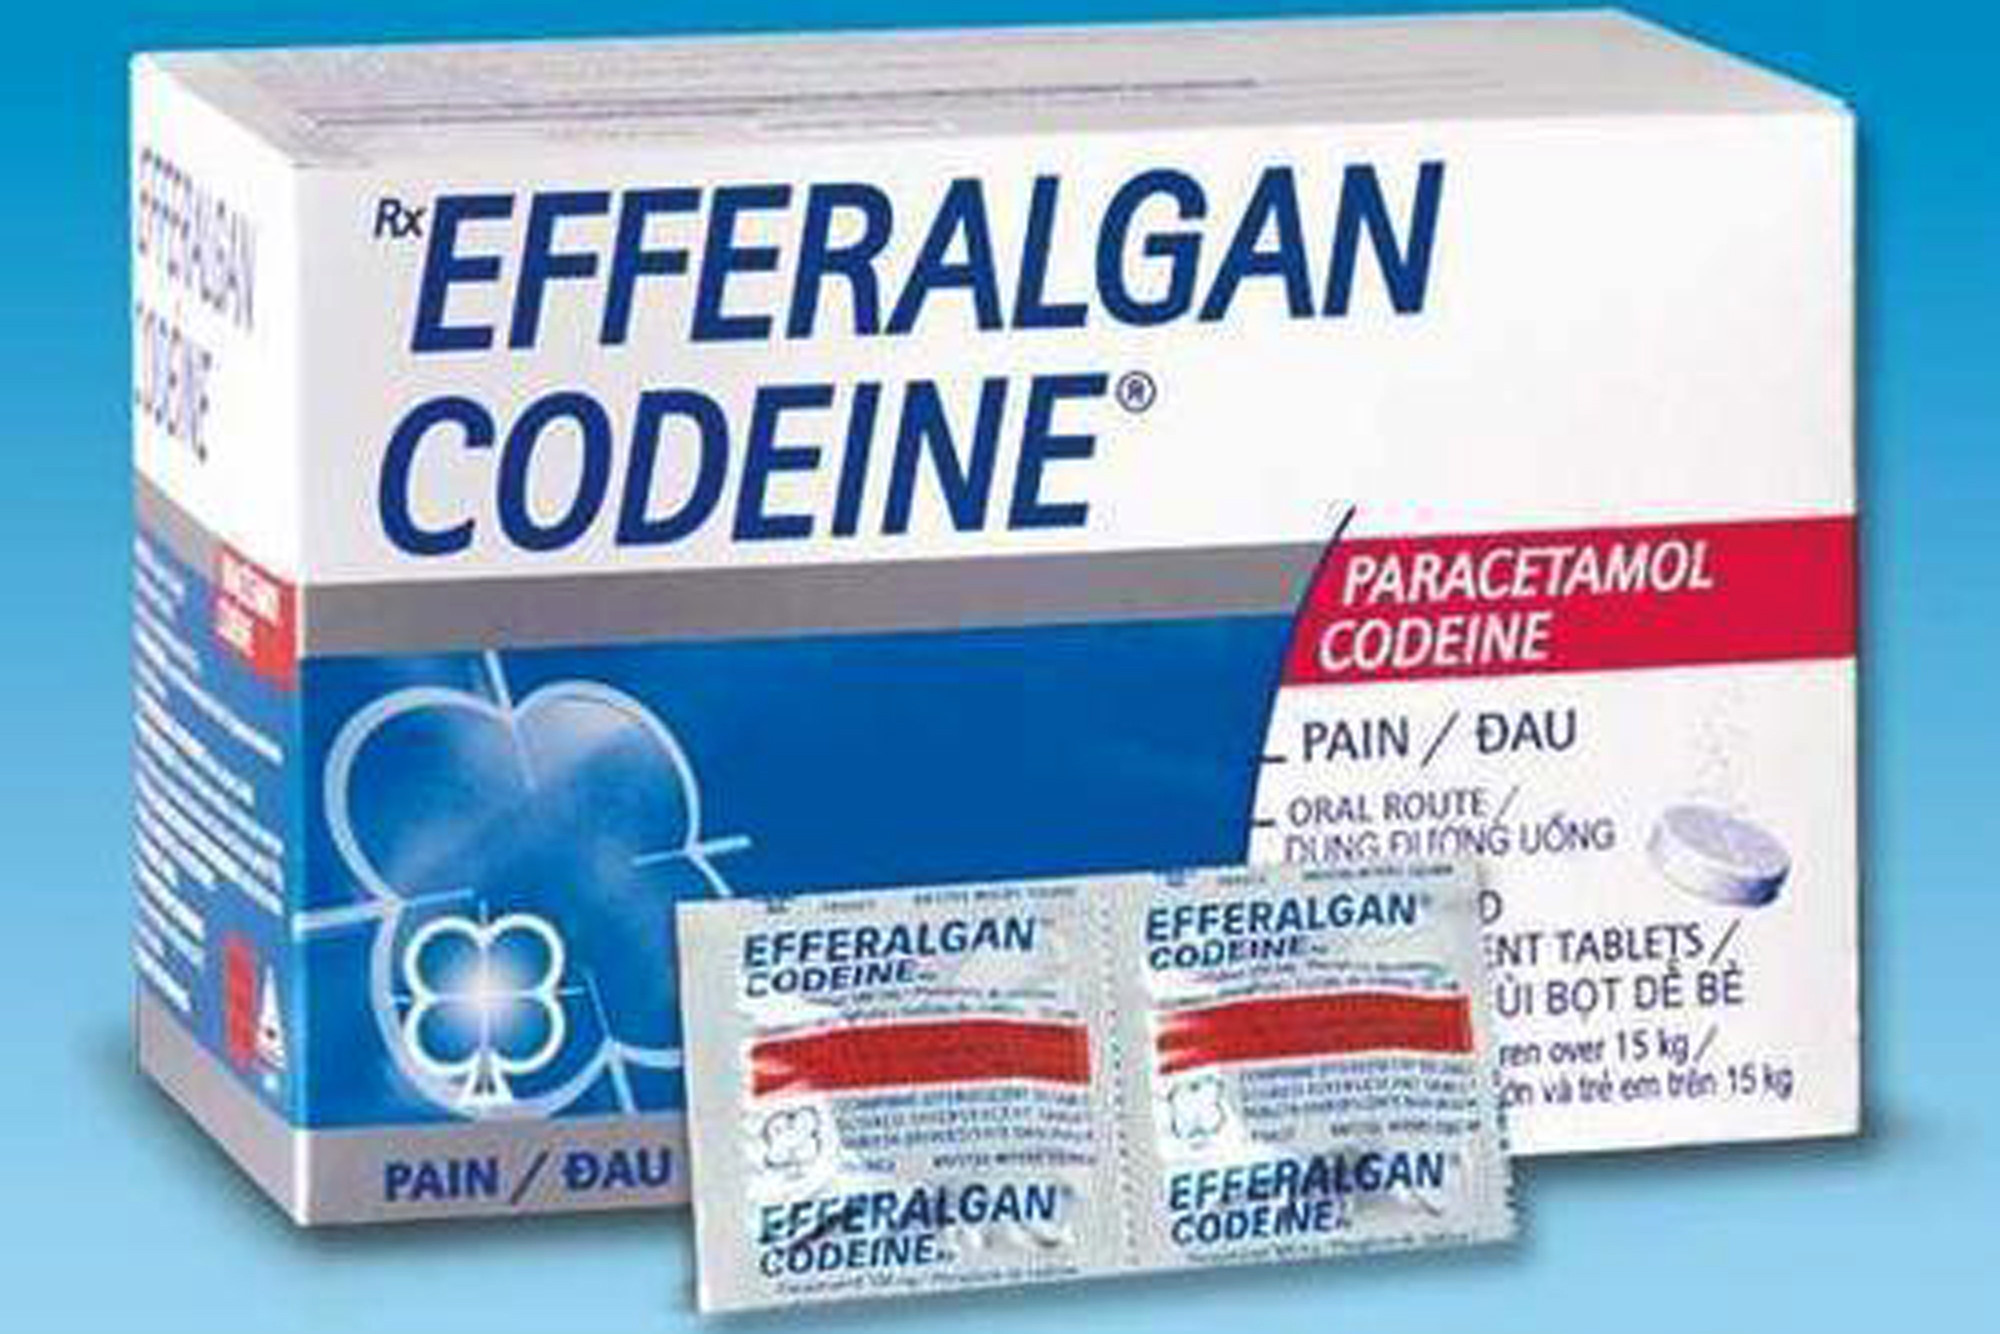 Thuốc Efferalgan Codeine là gì?